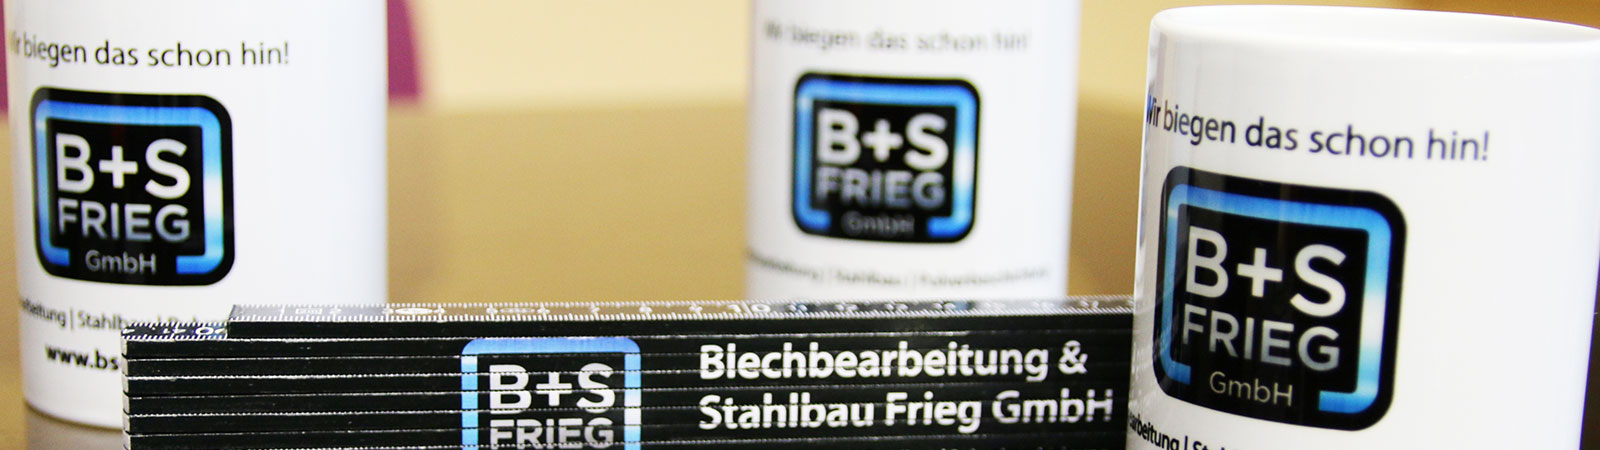 B+S Frieg GmbH